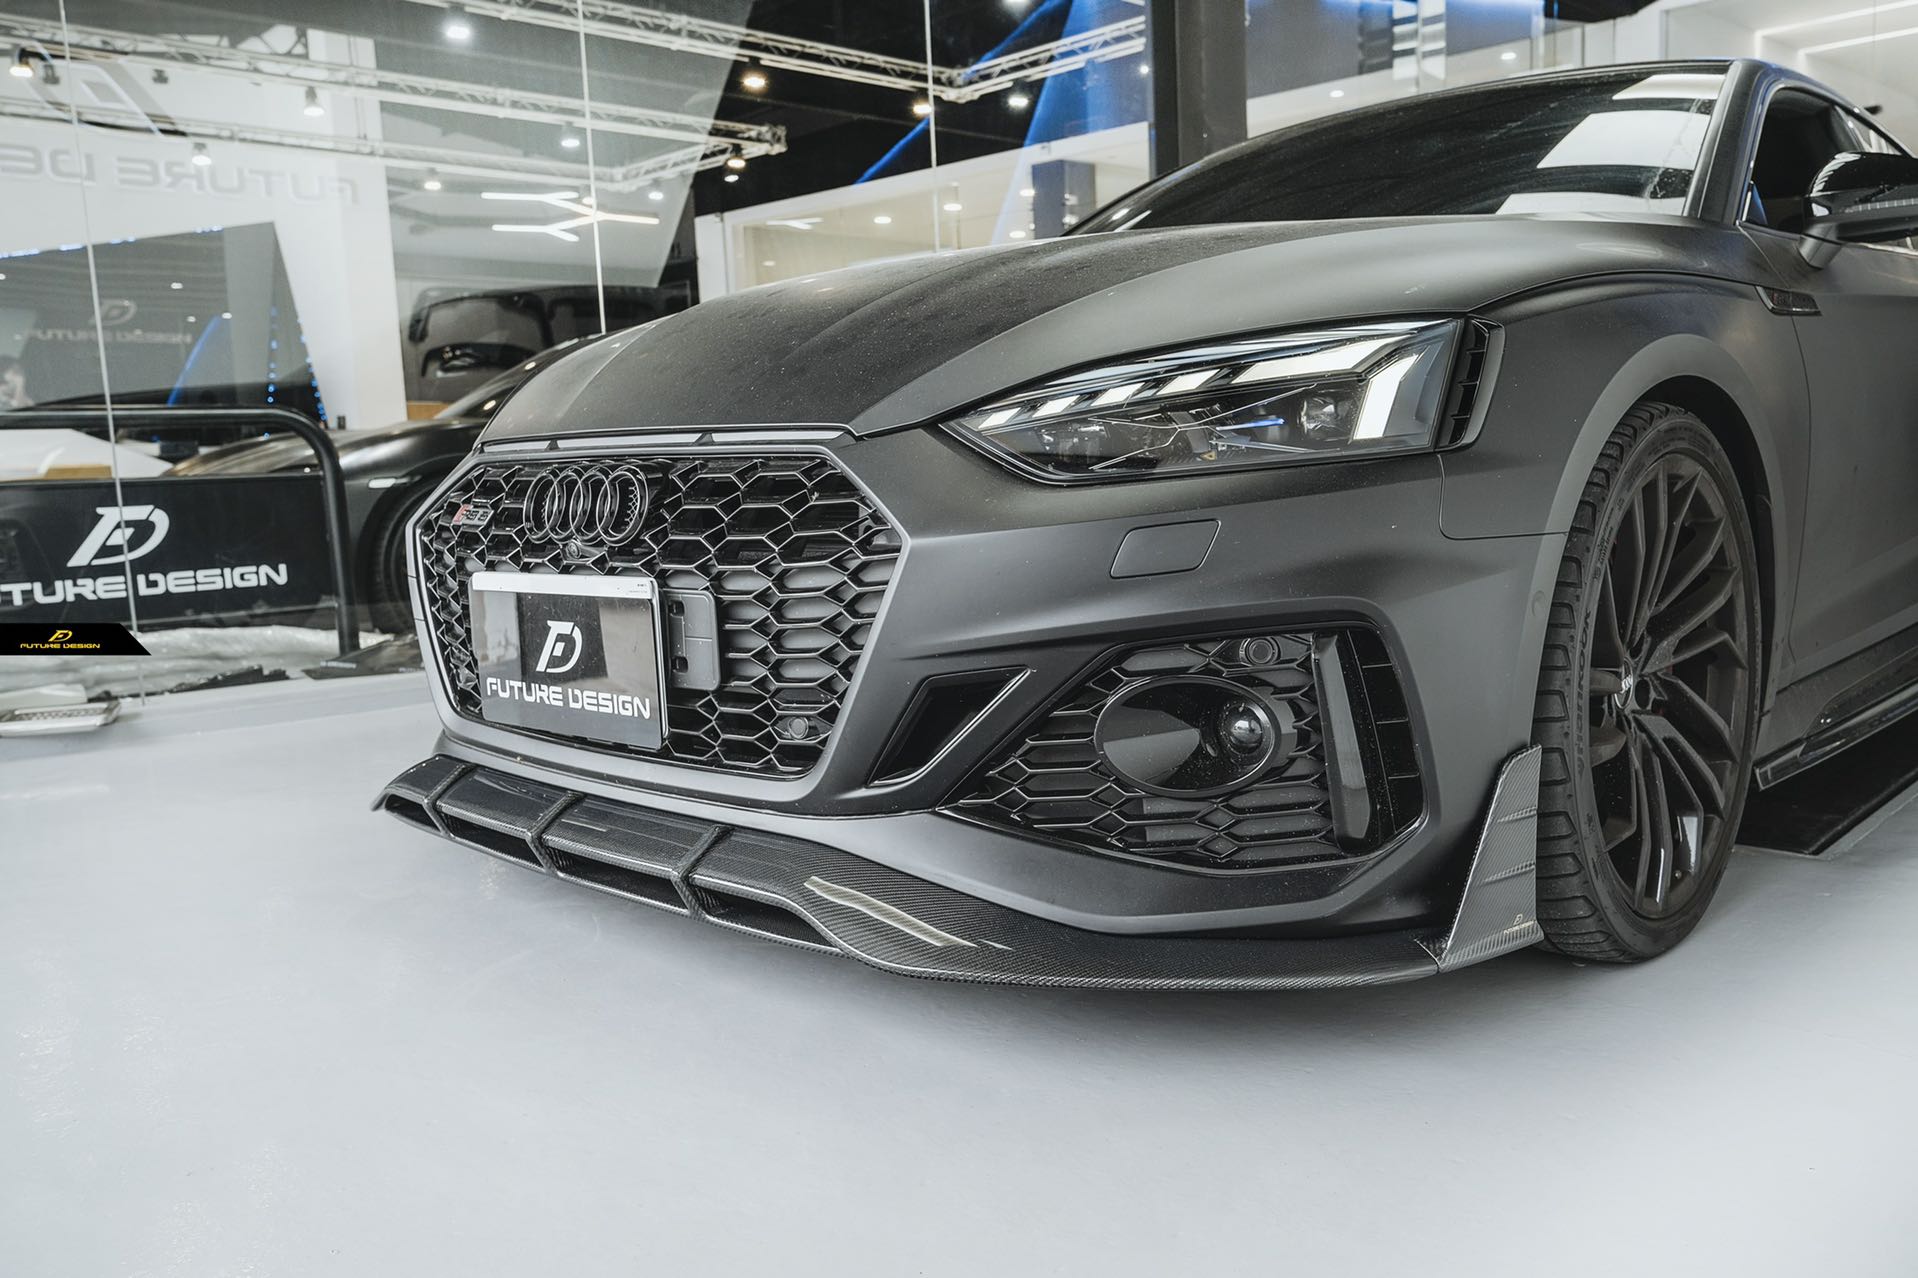 Future Design Carbon Fiber FRONT GRILL SIDE OVERLAY TRIM - "Blaze kit" for Audi RS5 B9.5 2020+